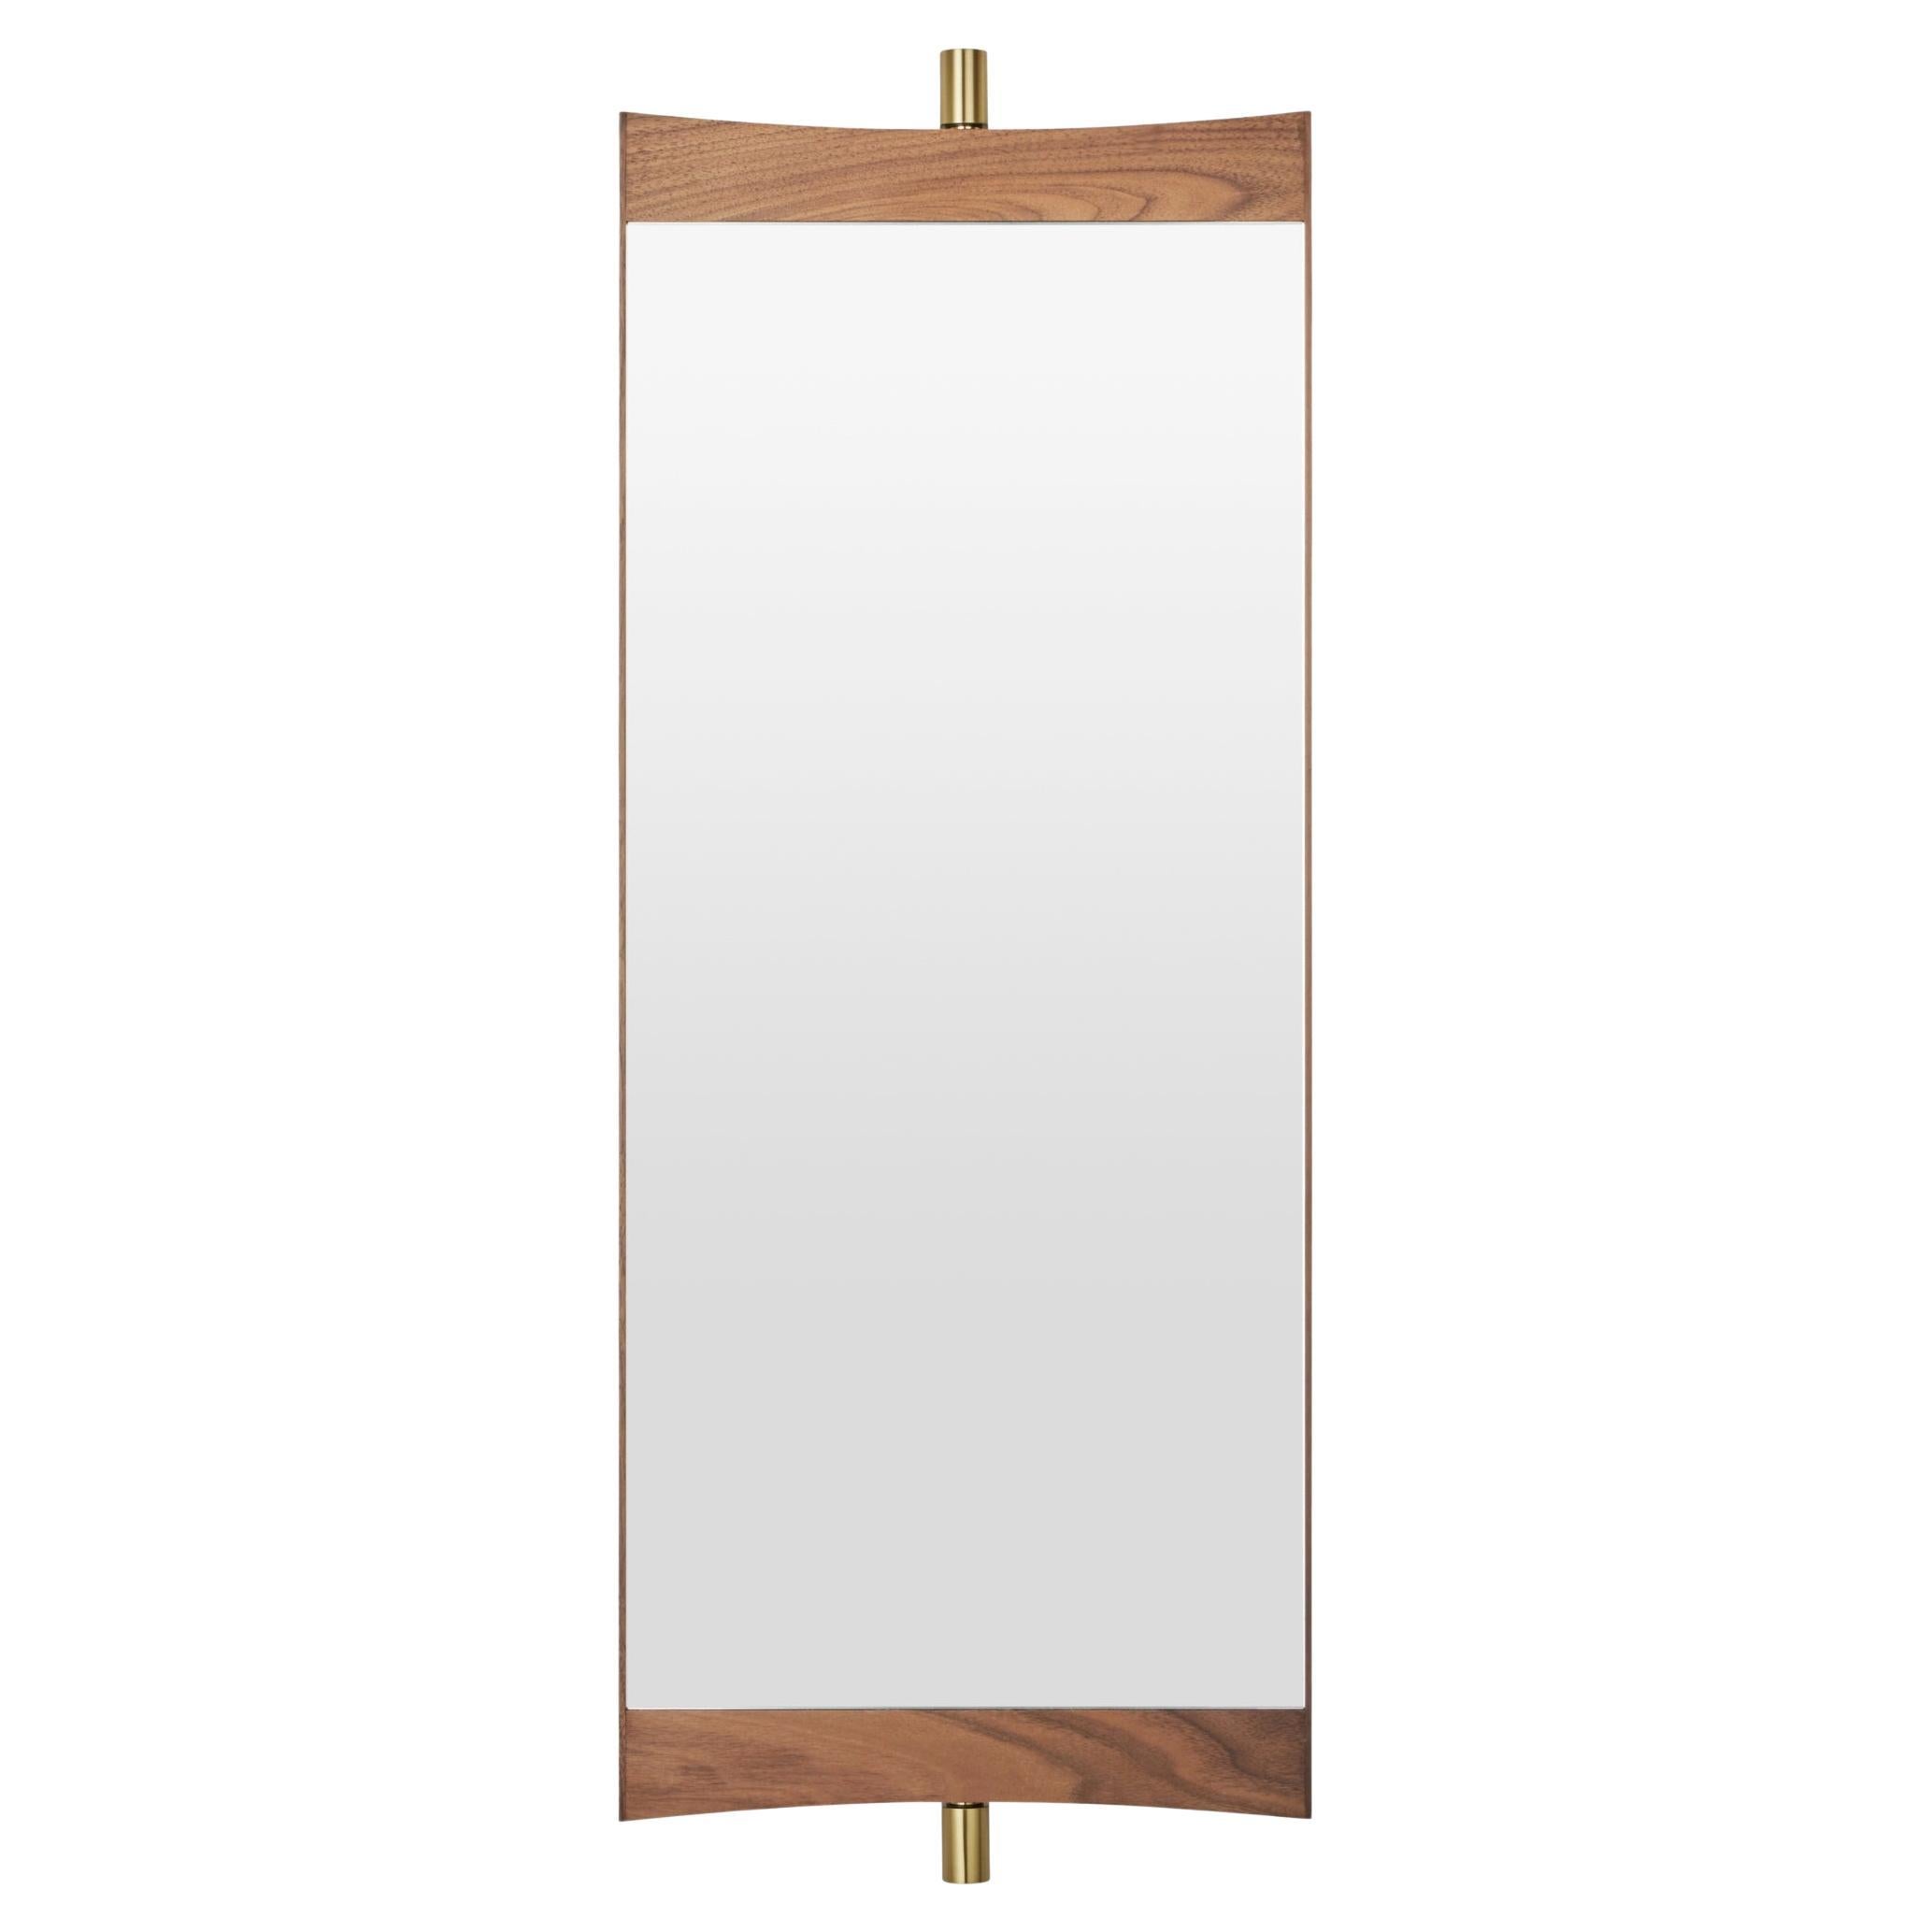 GamFratesi Three-Panel Vanity Mirror for GUBI For Sale 3